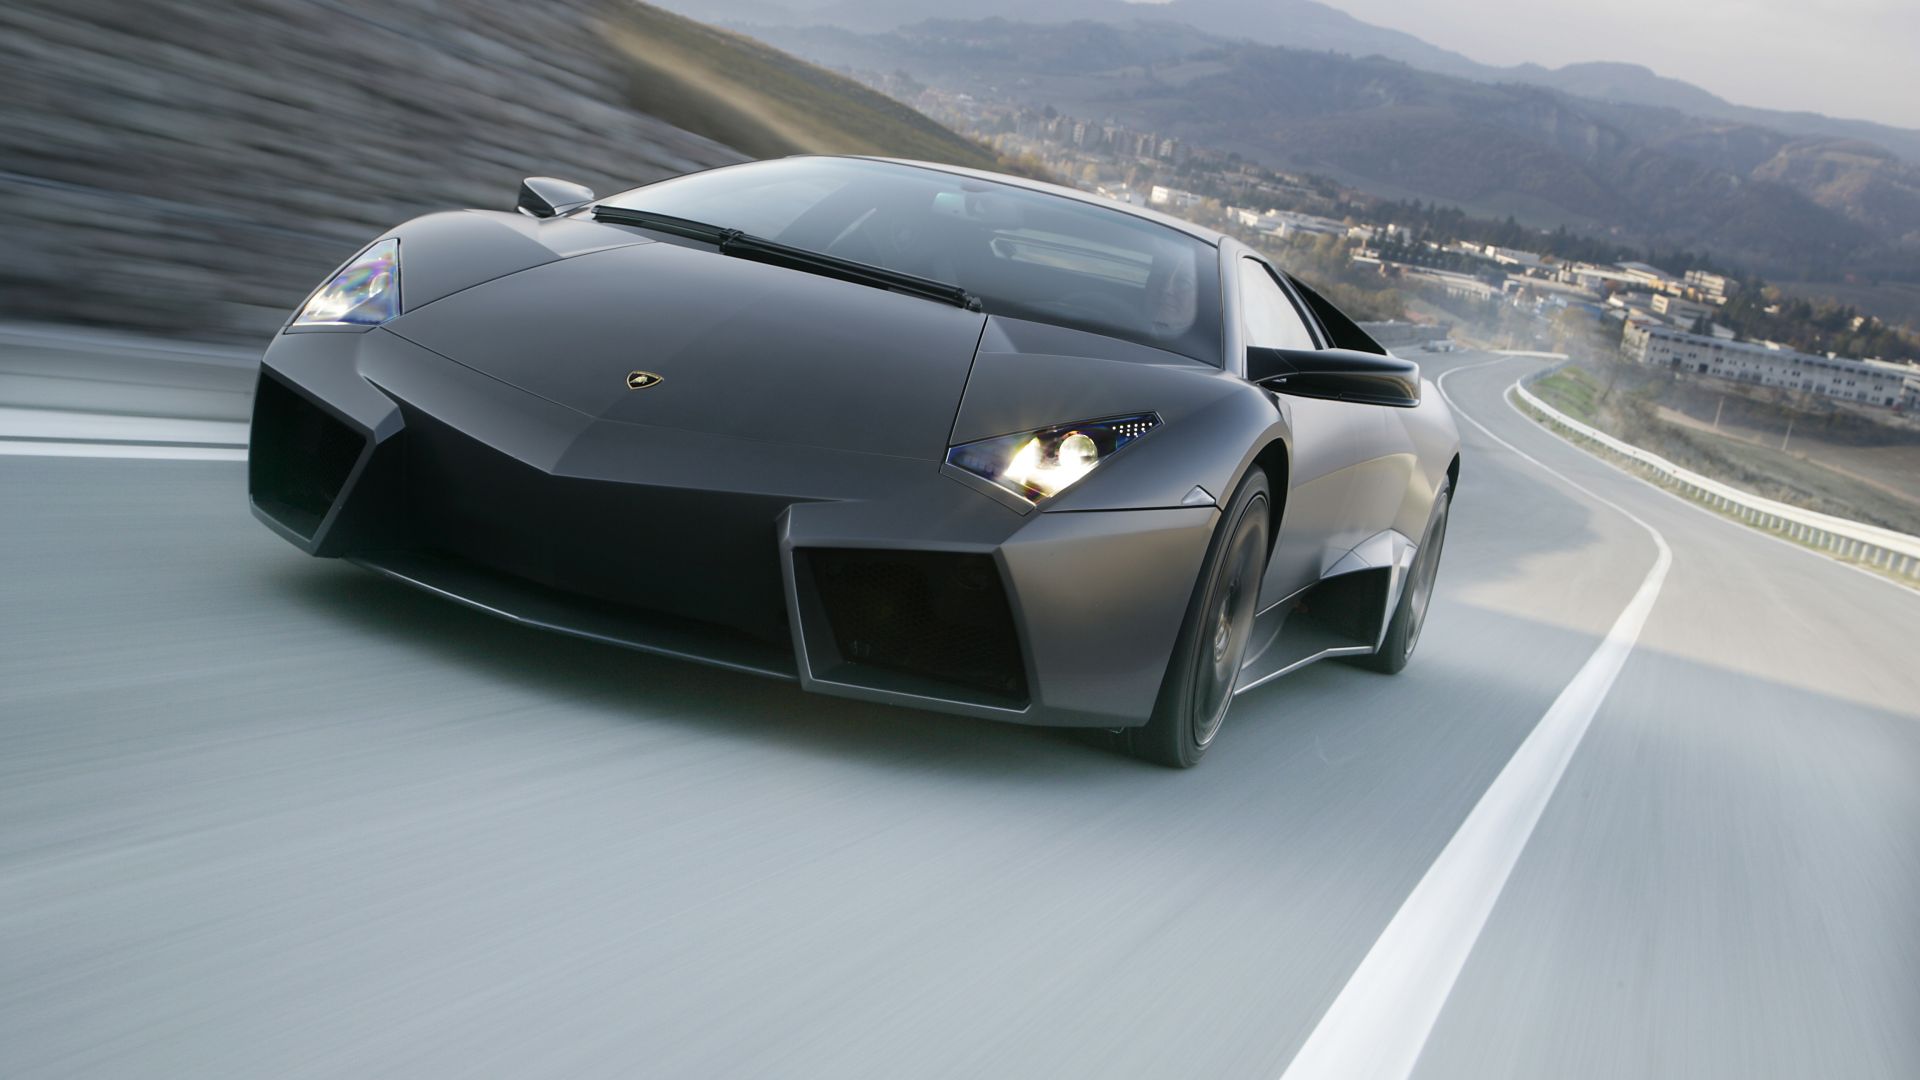 Ламборджини Ревентон, суперкар, суперавто, авто, Lamborghini Reventon, supercar (horizontal)